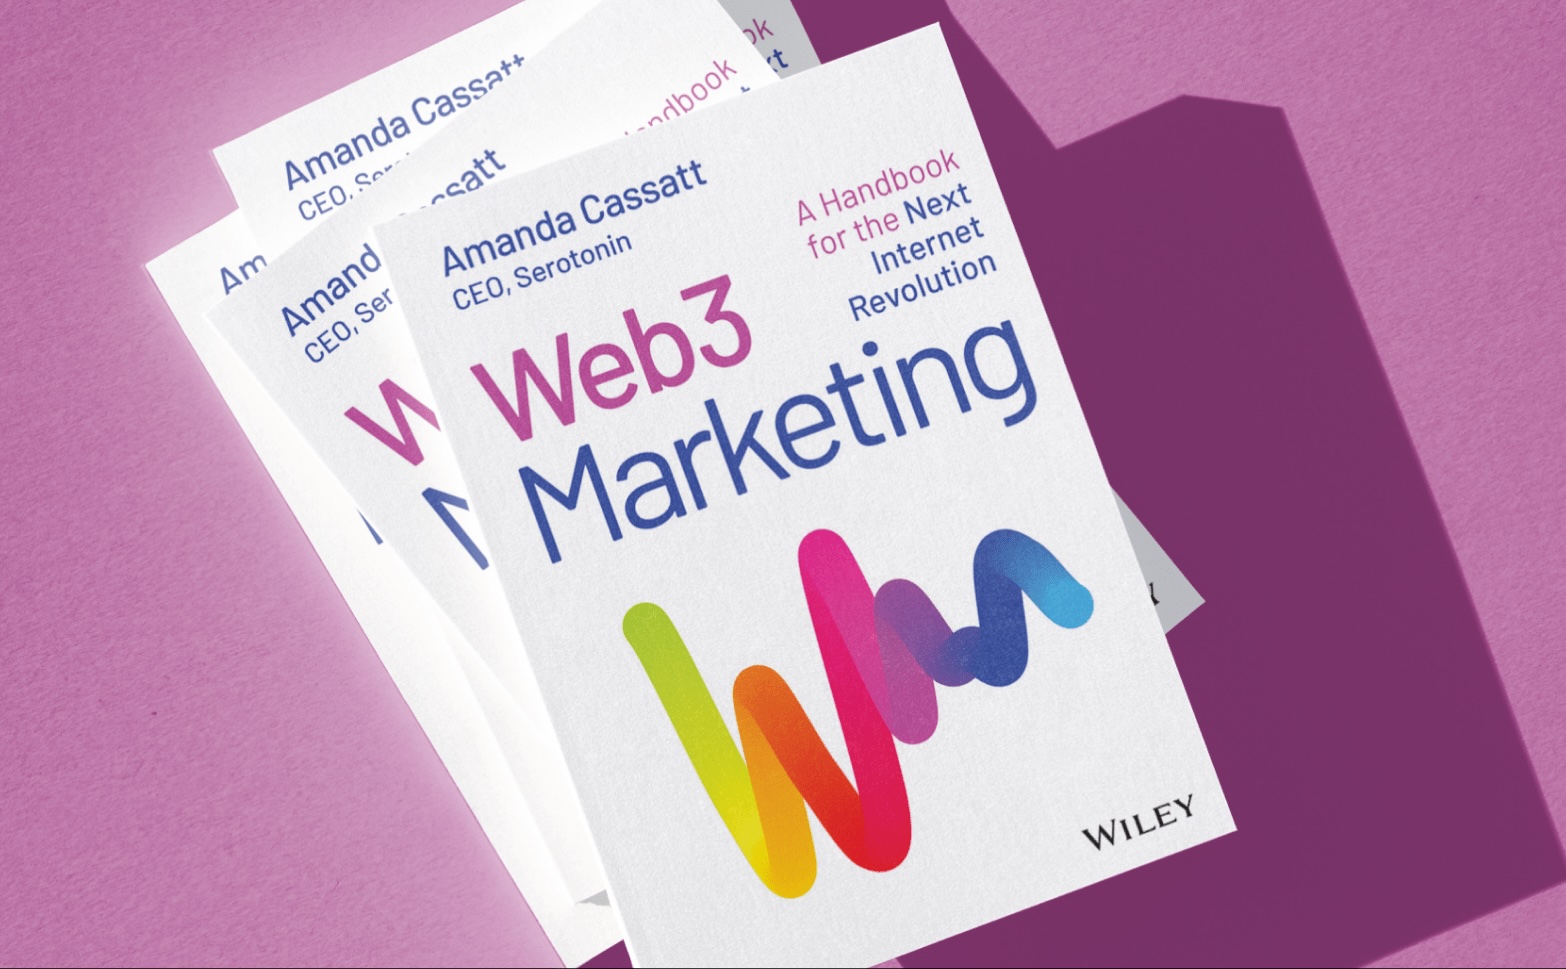 Web3 Marketing and the Power of Community with Amanda Cassatt